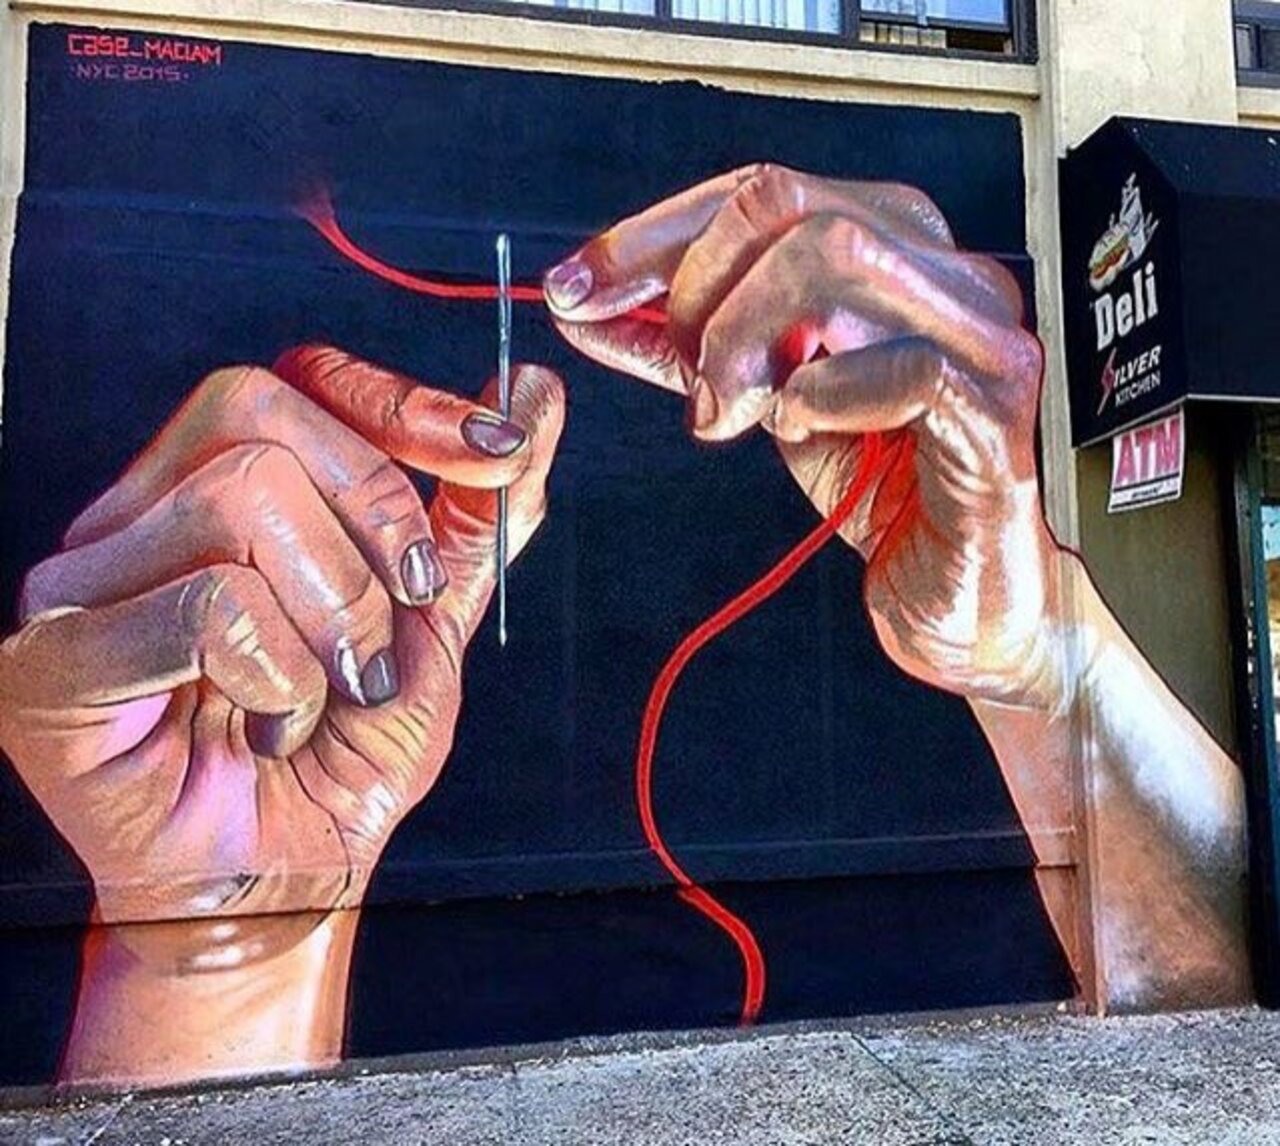 New tumblr post: "New Street Art by Case Ma'Claim in NYC 

#art #graffiti #mural #streetart https://t.co/f0Z0Lr61Bm" …